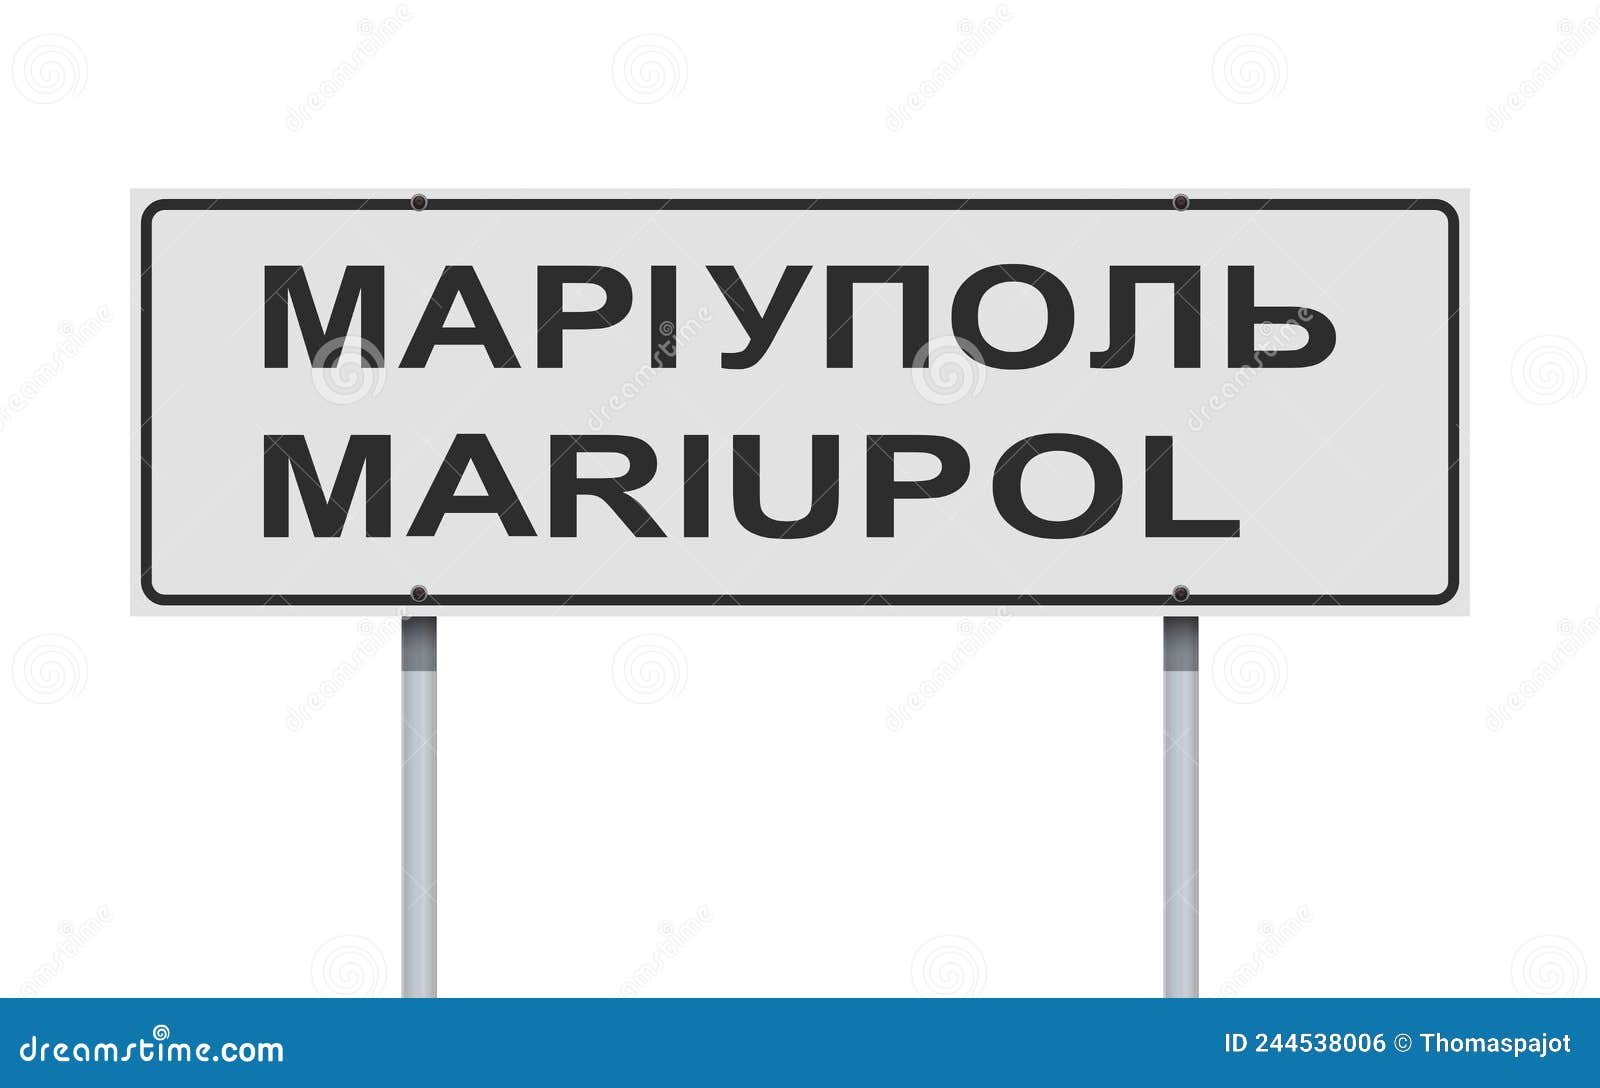 mariupol city sign